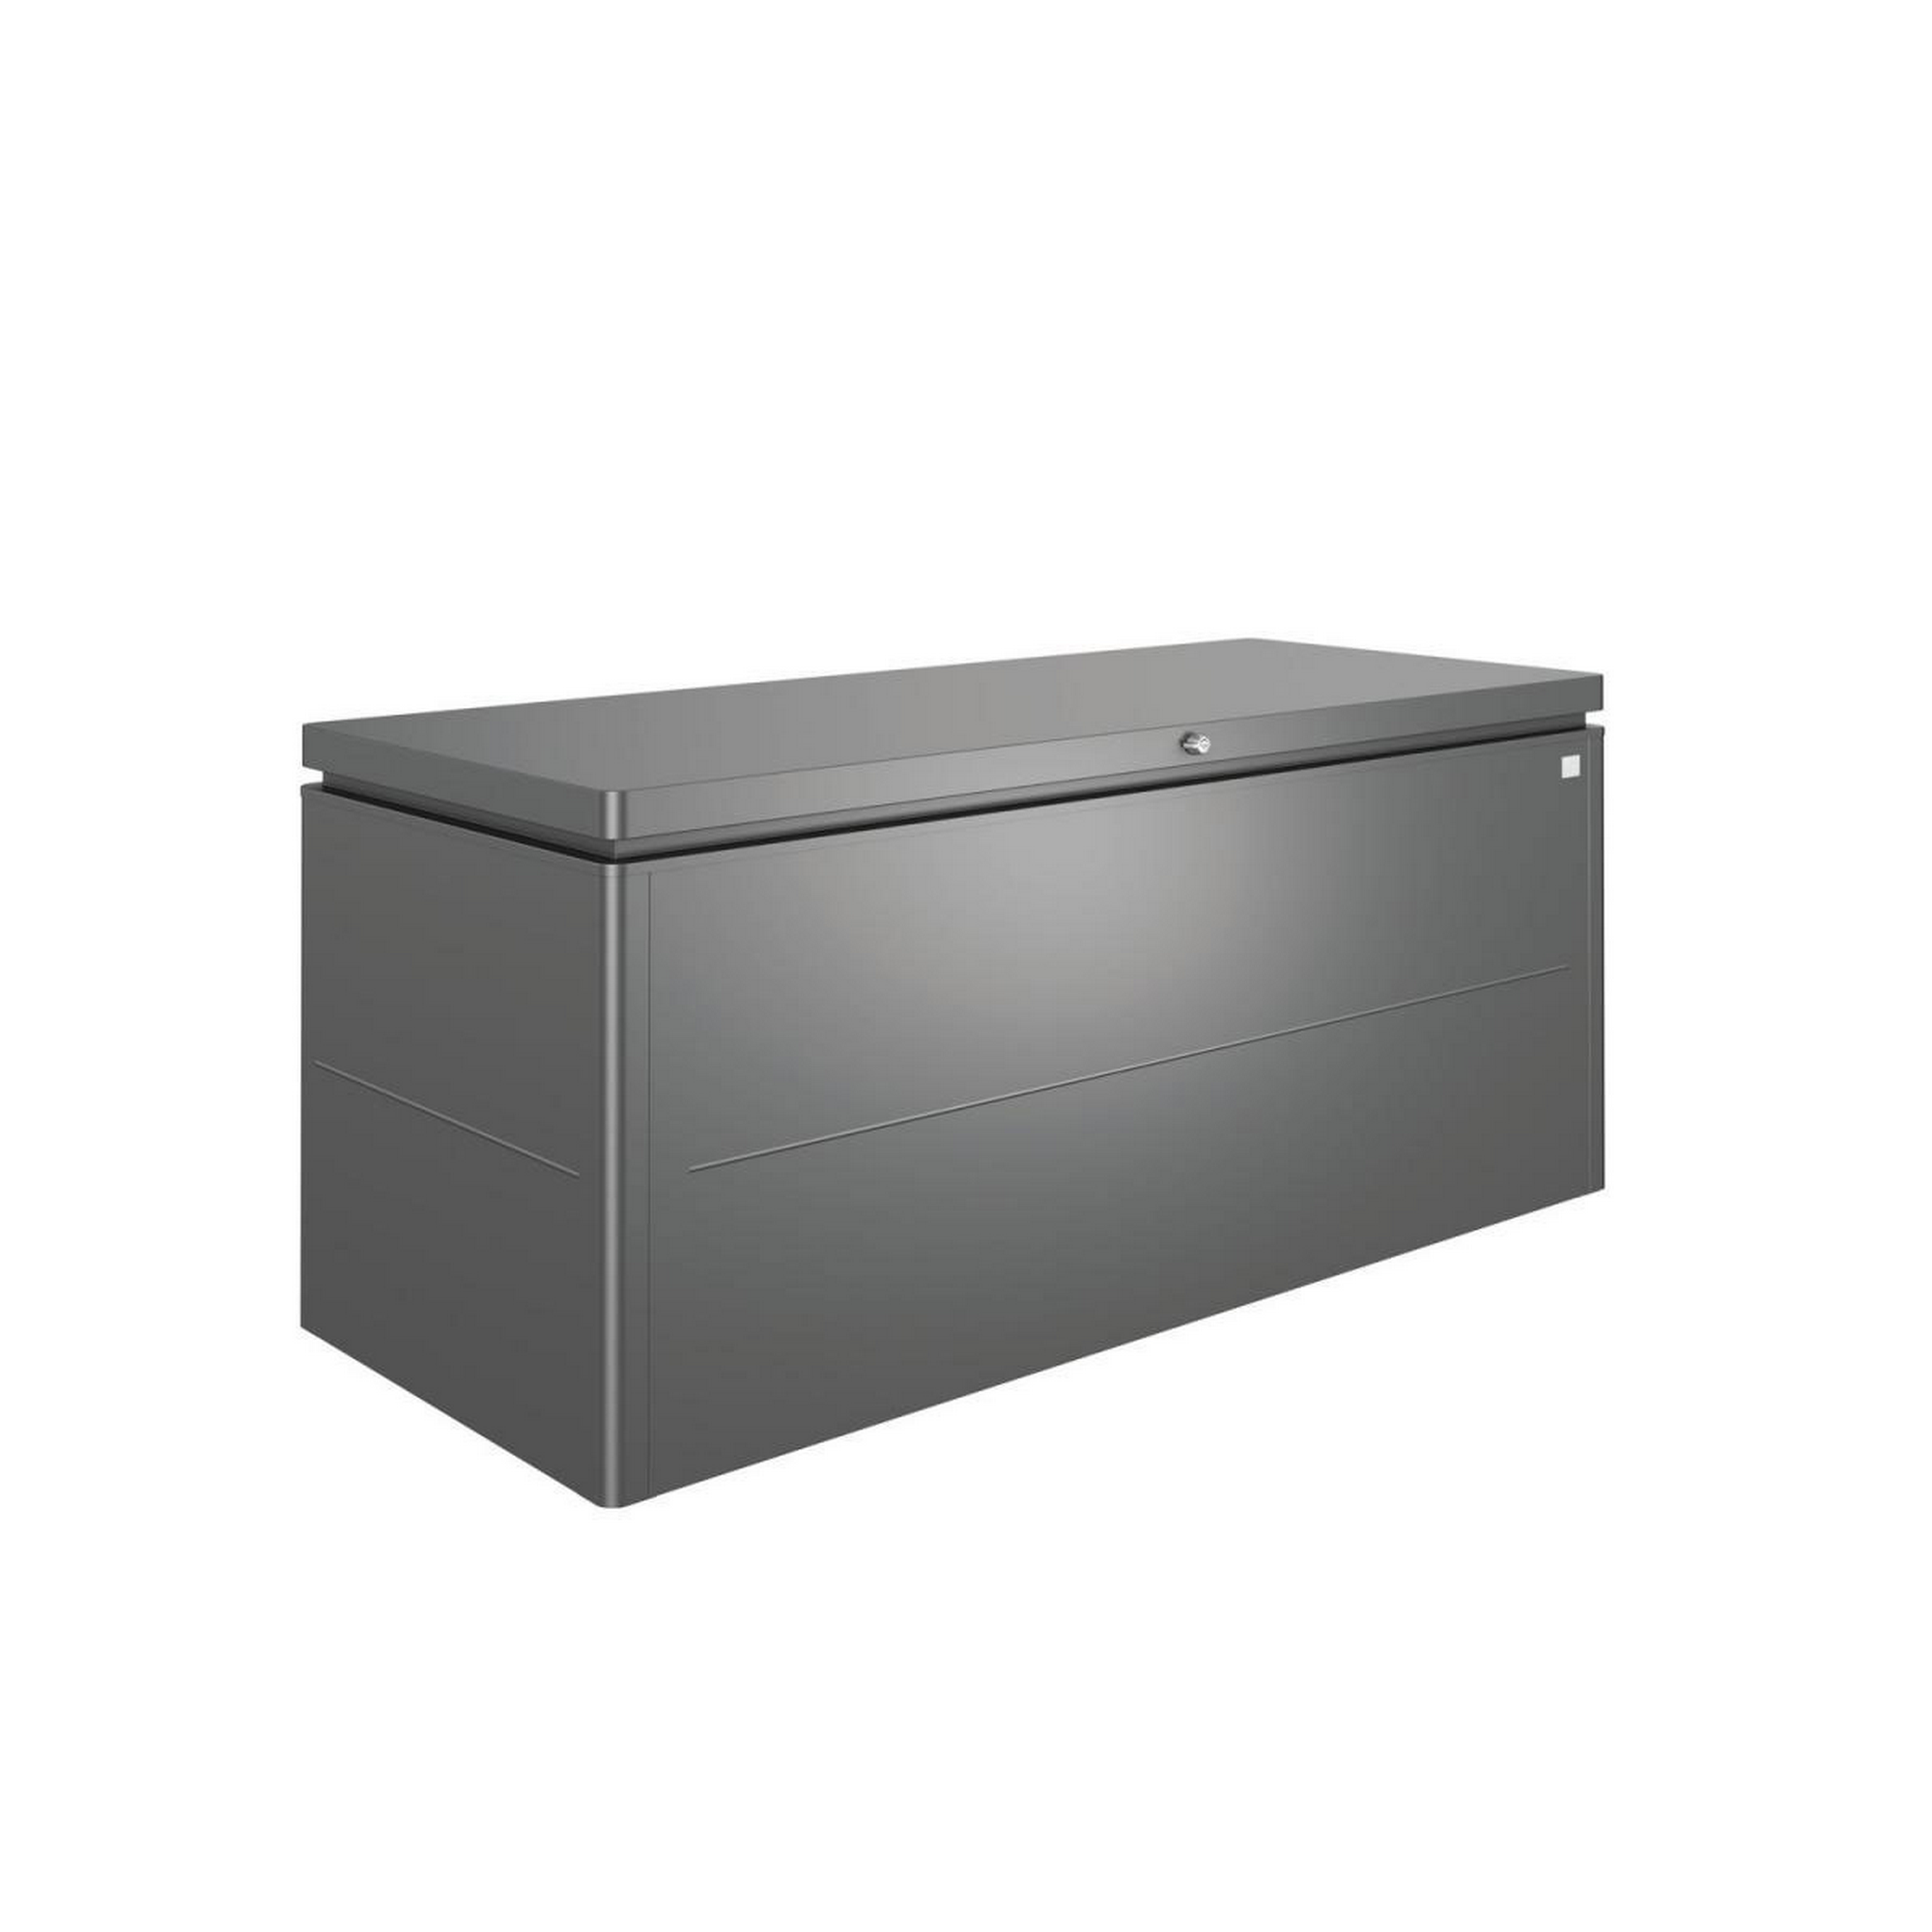 Aufbewahrungsbox 'LoungeBox 200' dunkelgrau metallic 200 x 84 x 88,5 cm + product picture